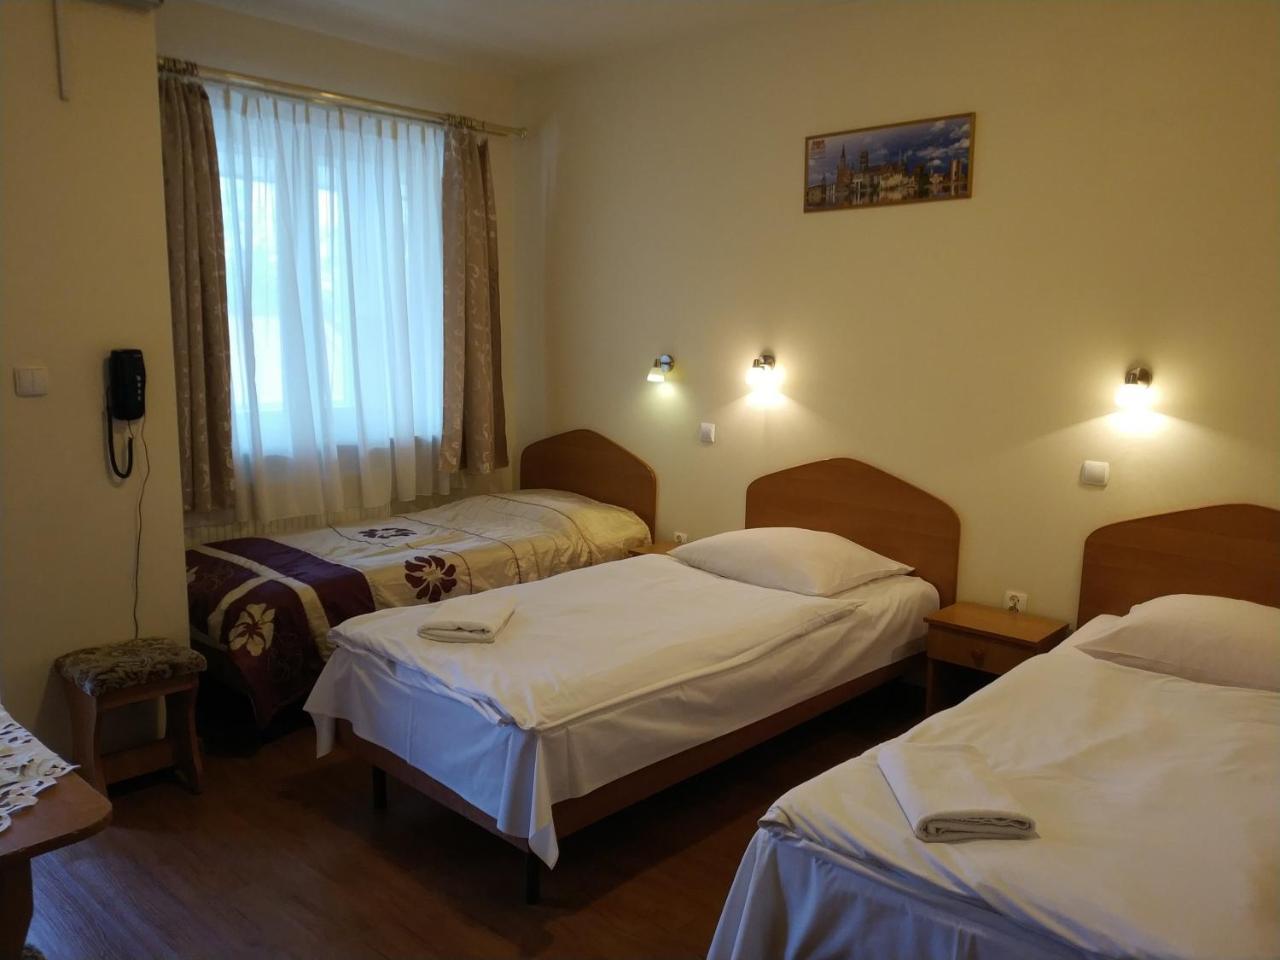 Hotel Gorsko Wieliczka Exterior photo